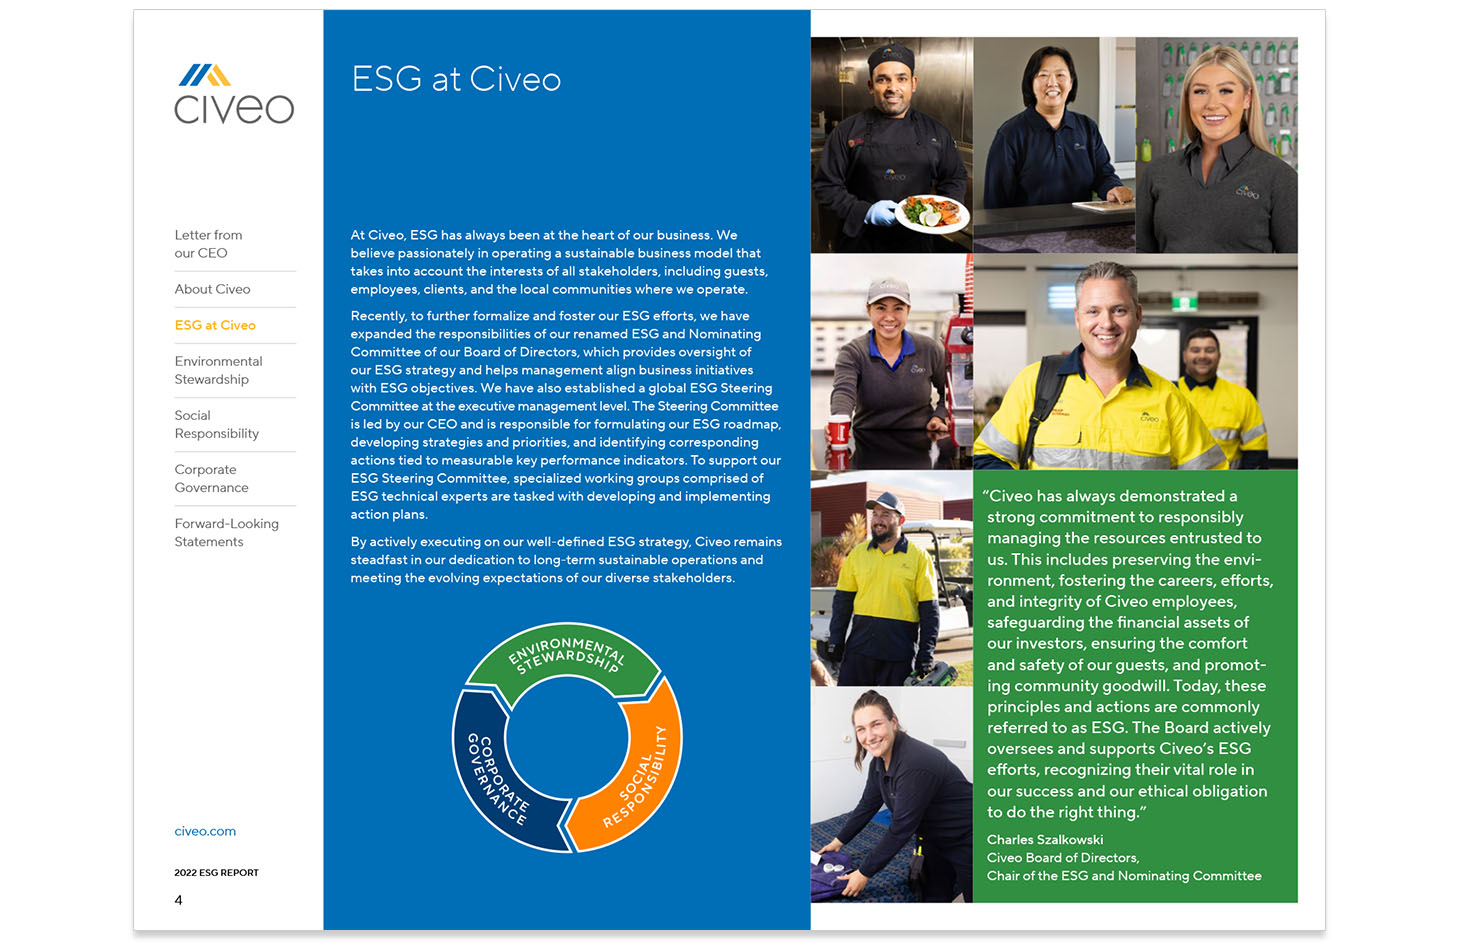 Civeo ESG Report Image 1